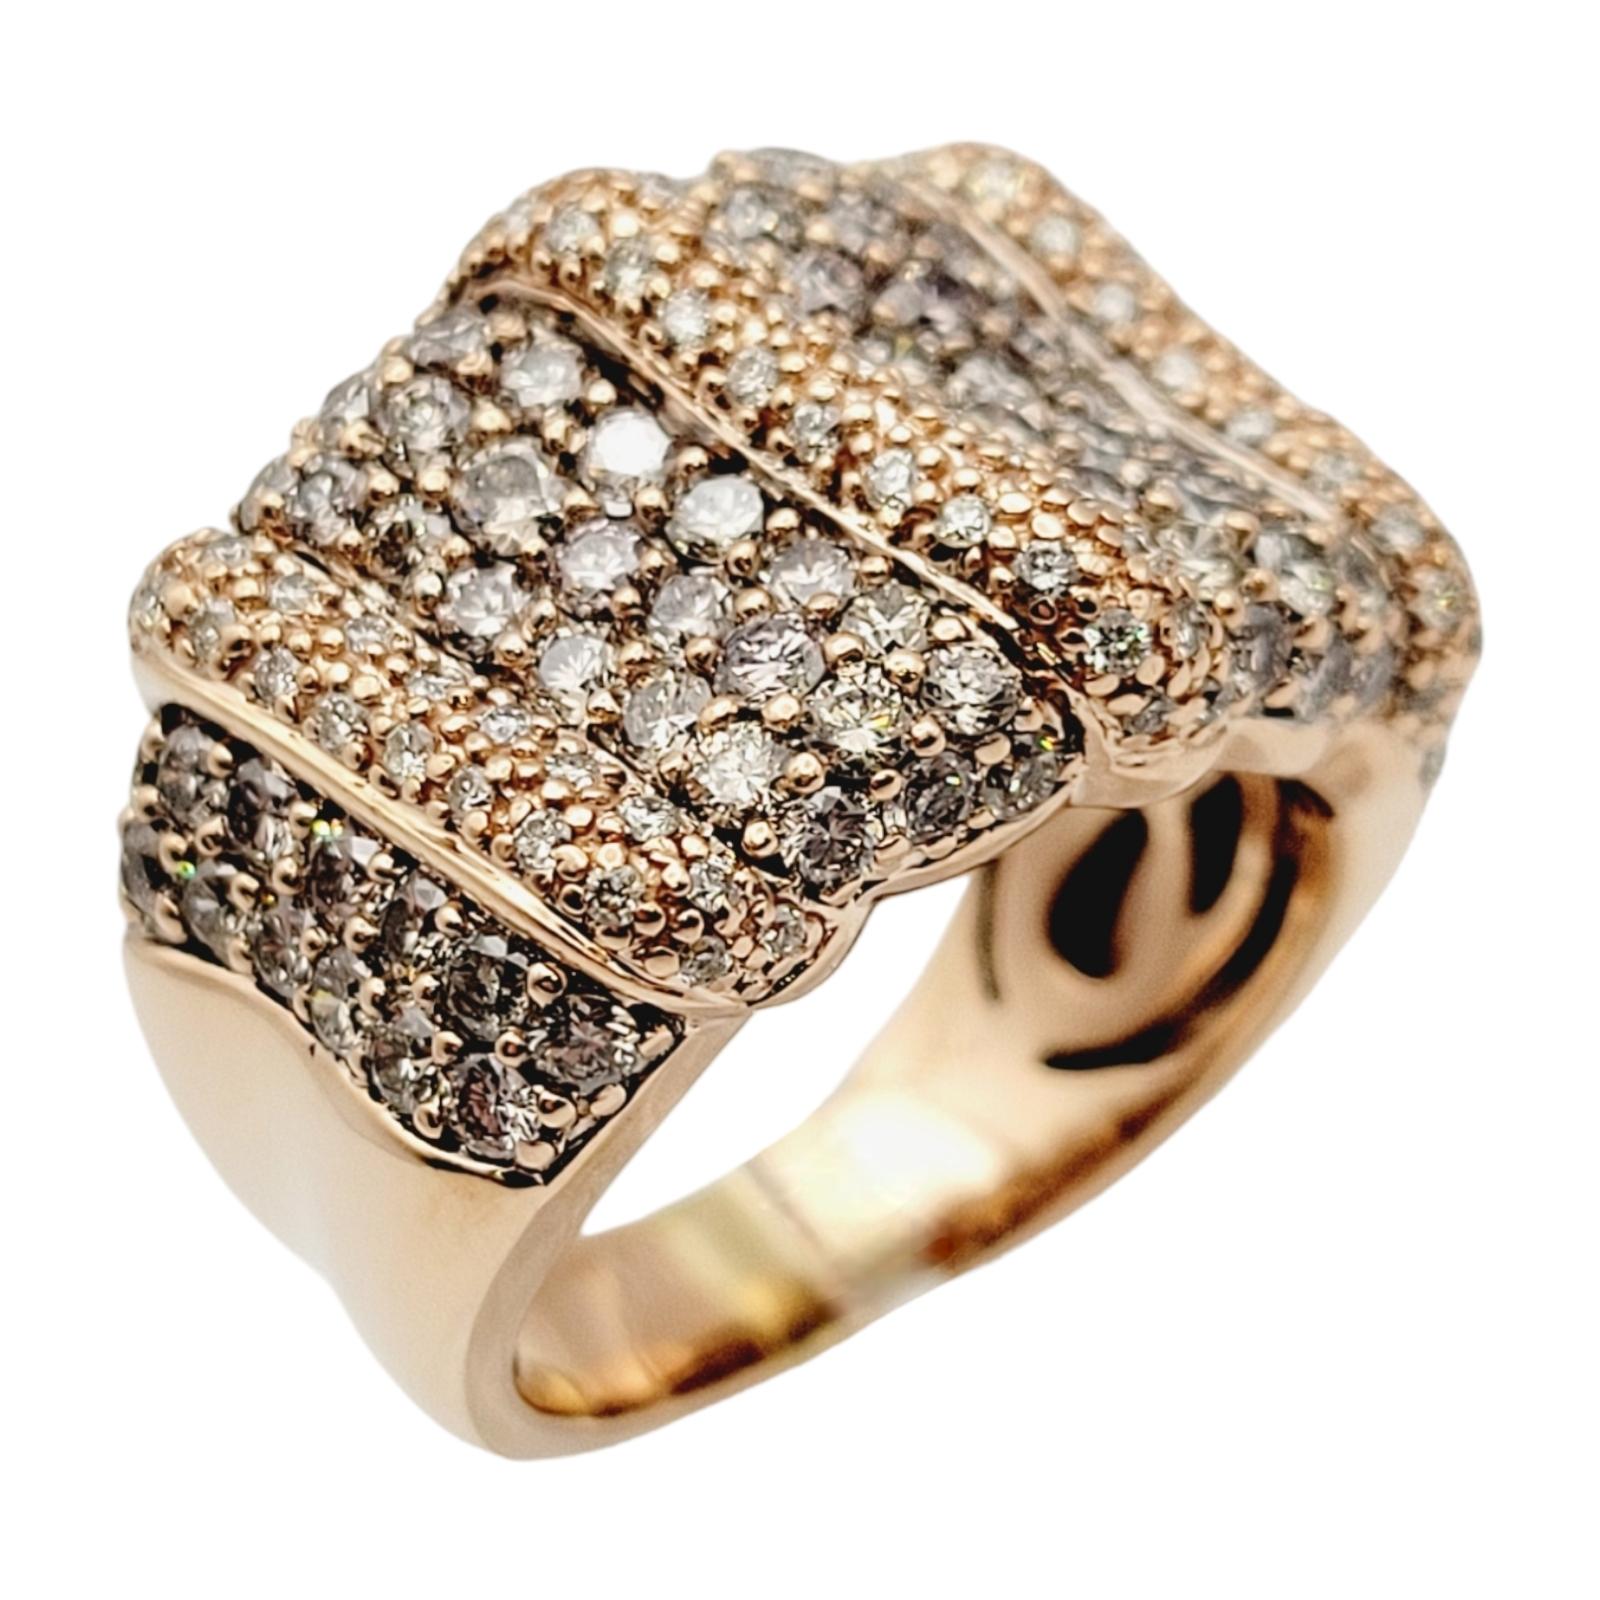 2.14 Carat Light Brown Diamond Pave Band Ring in Polished 14 Karat Rose Gold For Sale 4